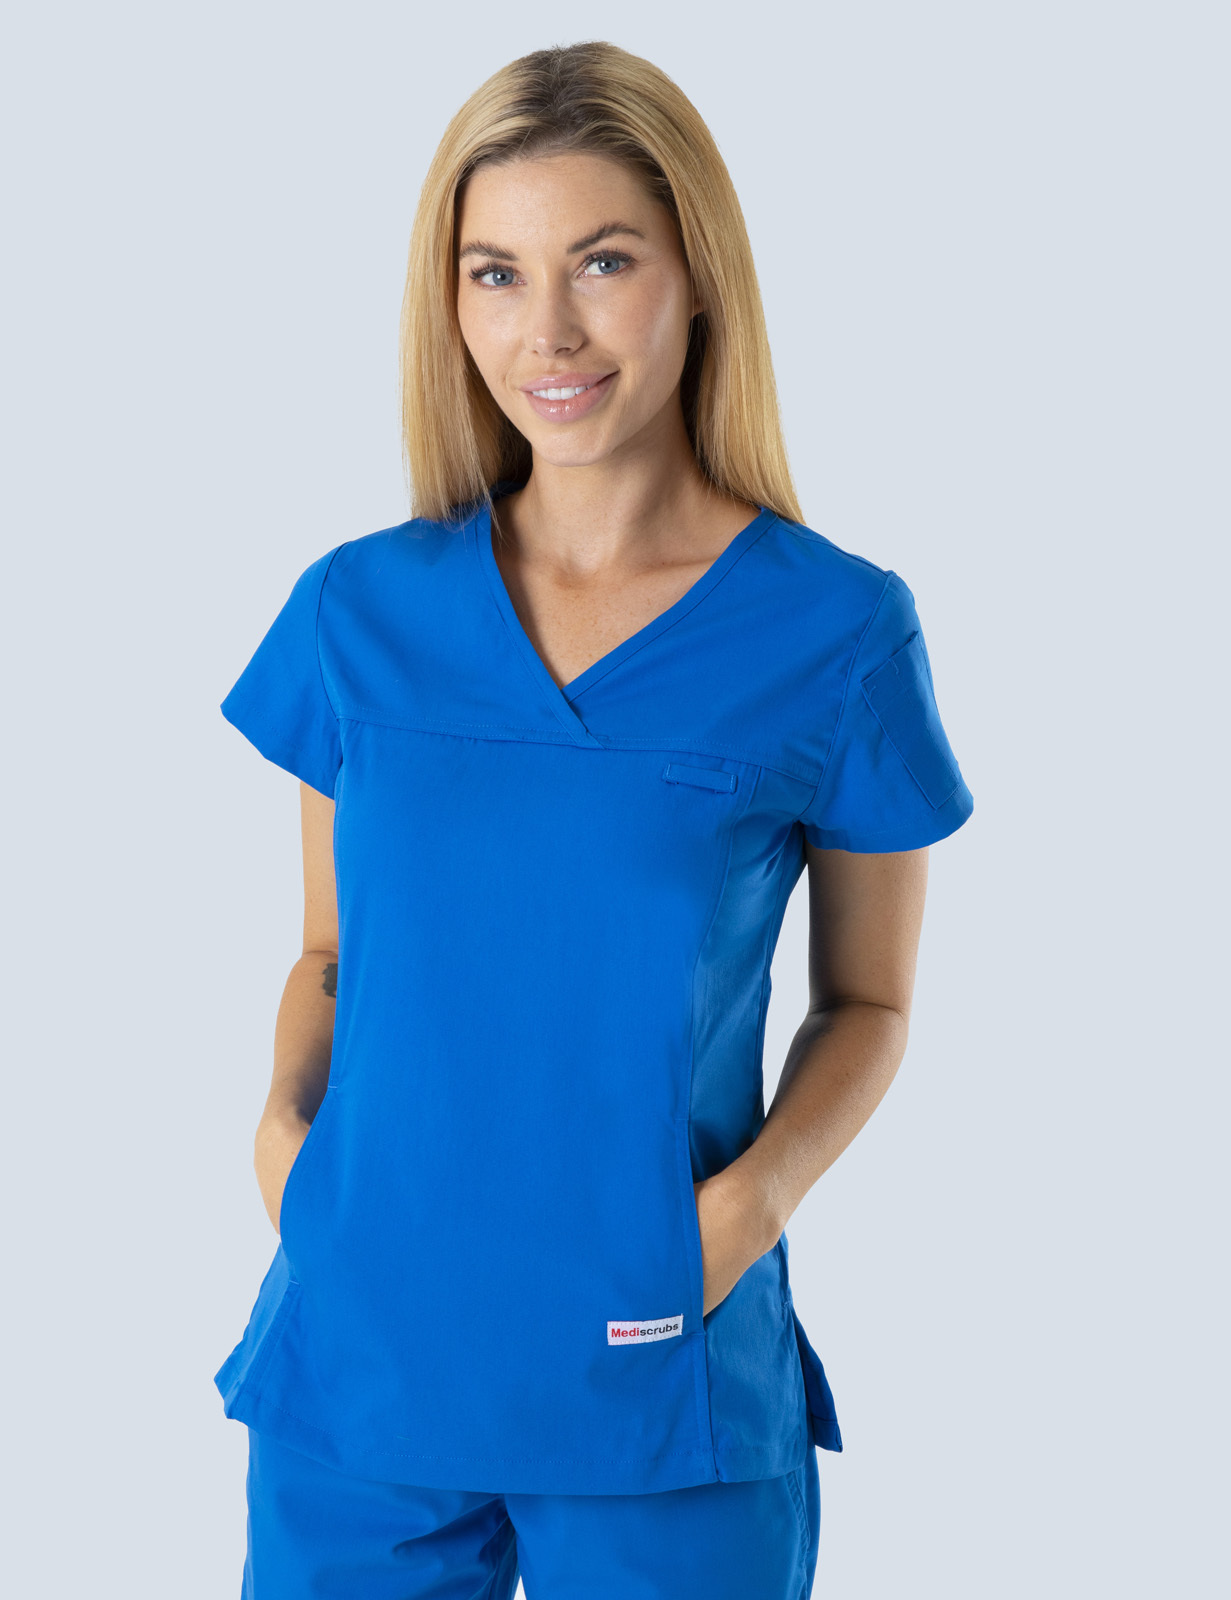 Queensland Children's Hospital Emergency Department Nurse Practitioner Uniform Top Bundle  (Women's Fit Top in Royal incl Logos)